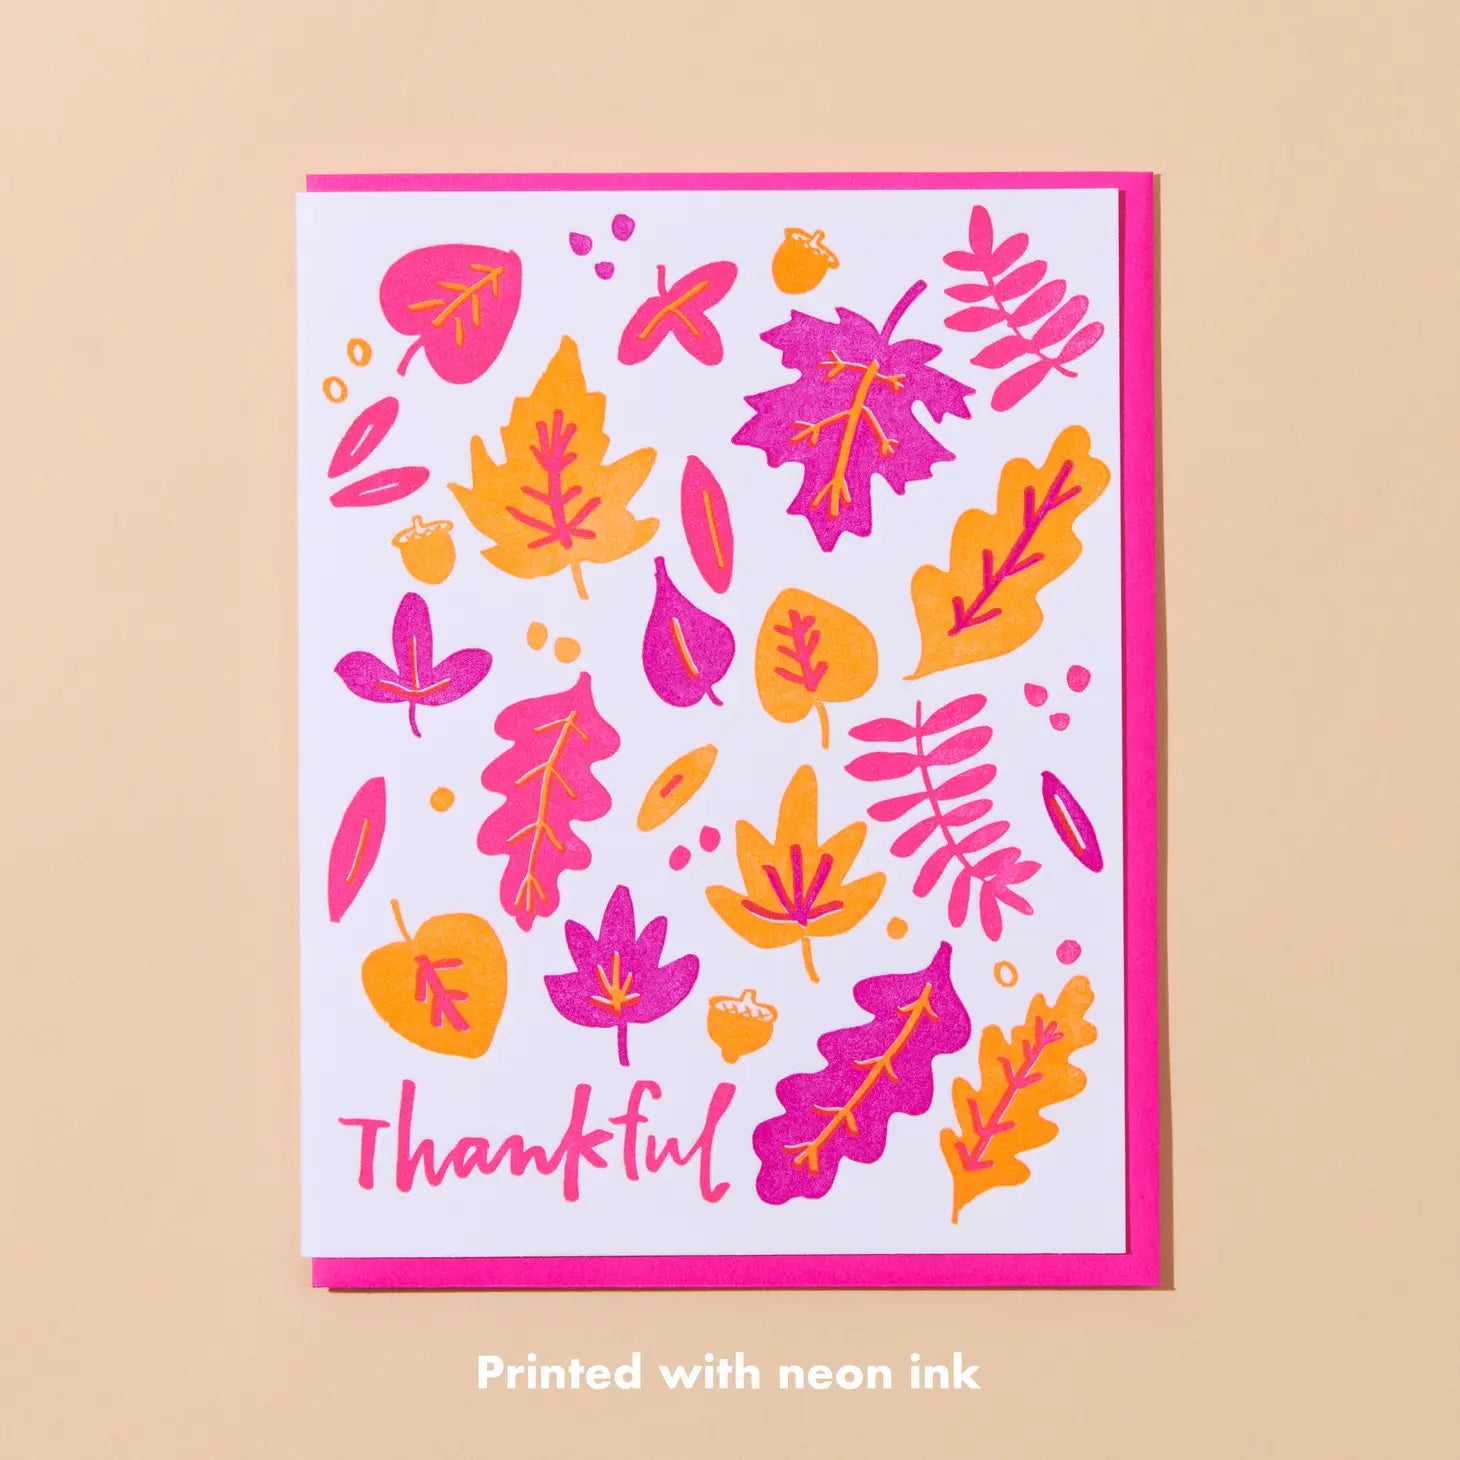 Thankful Neon Letterpress card